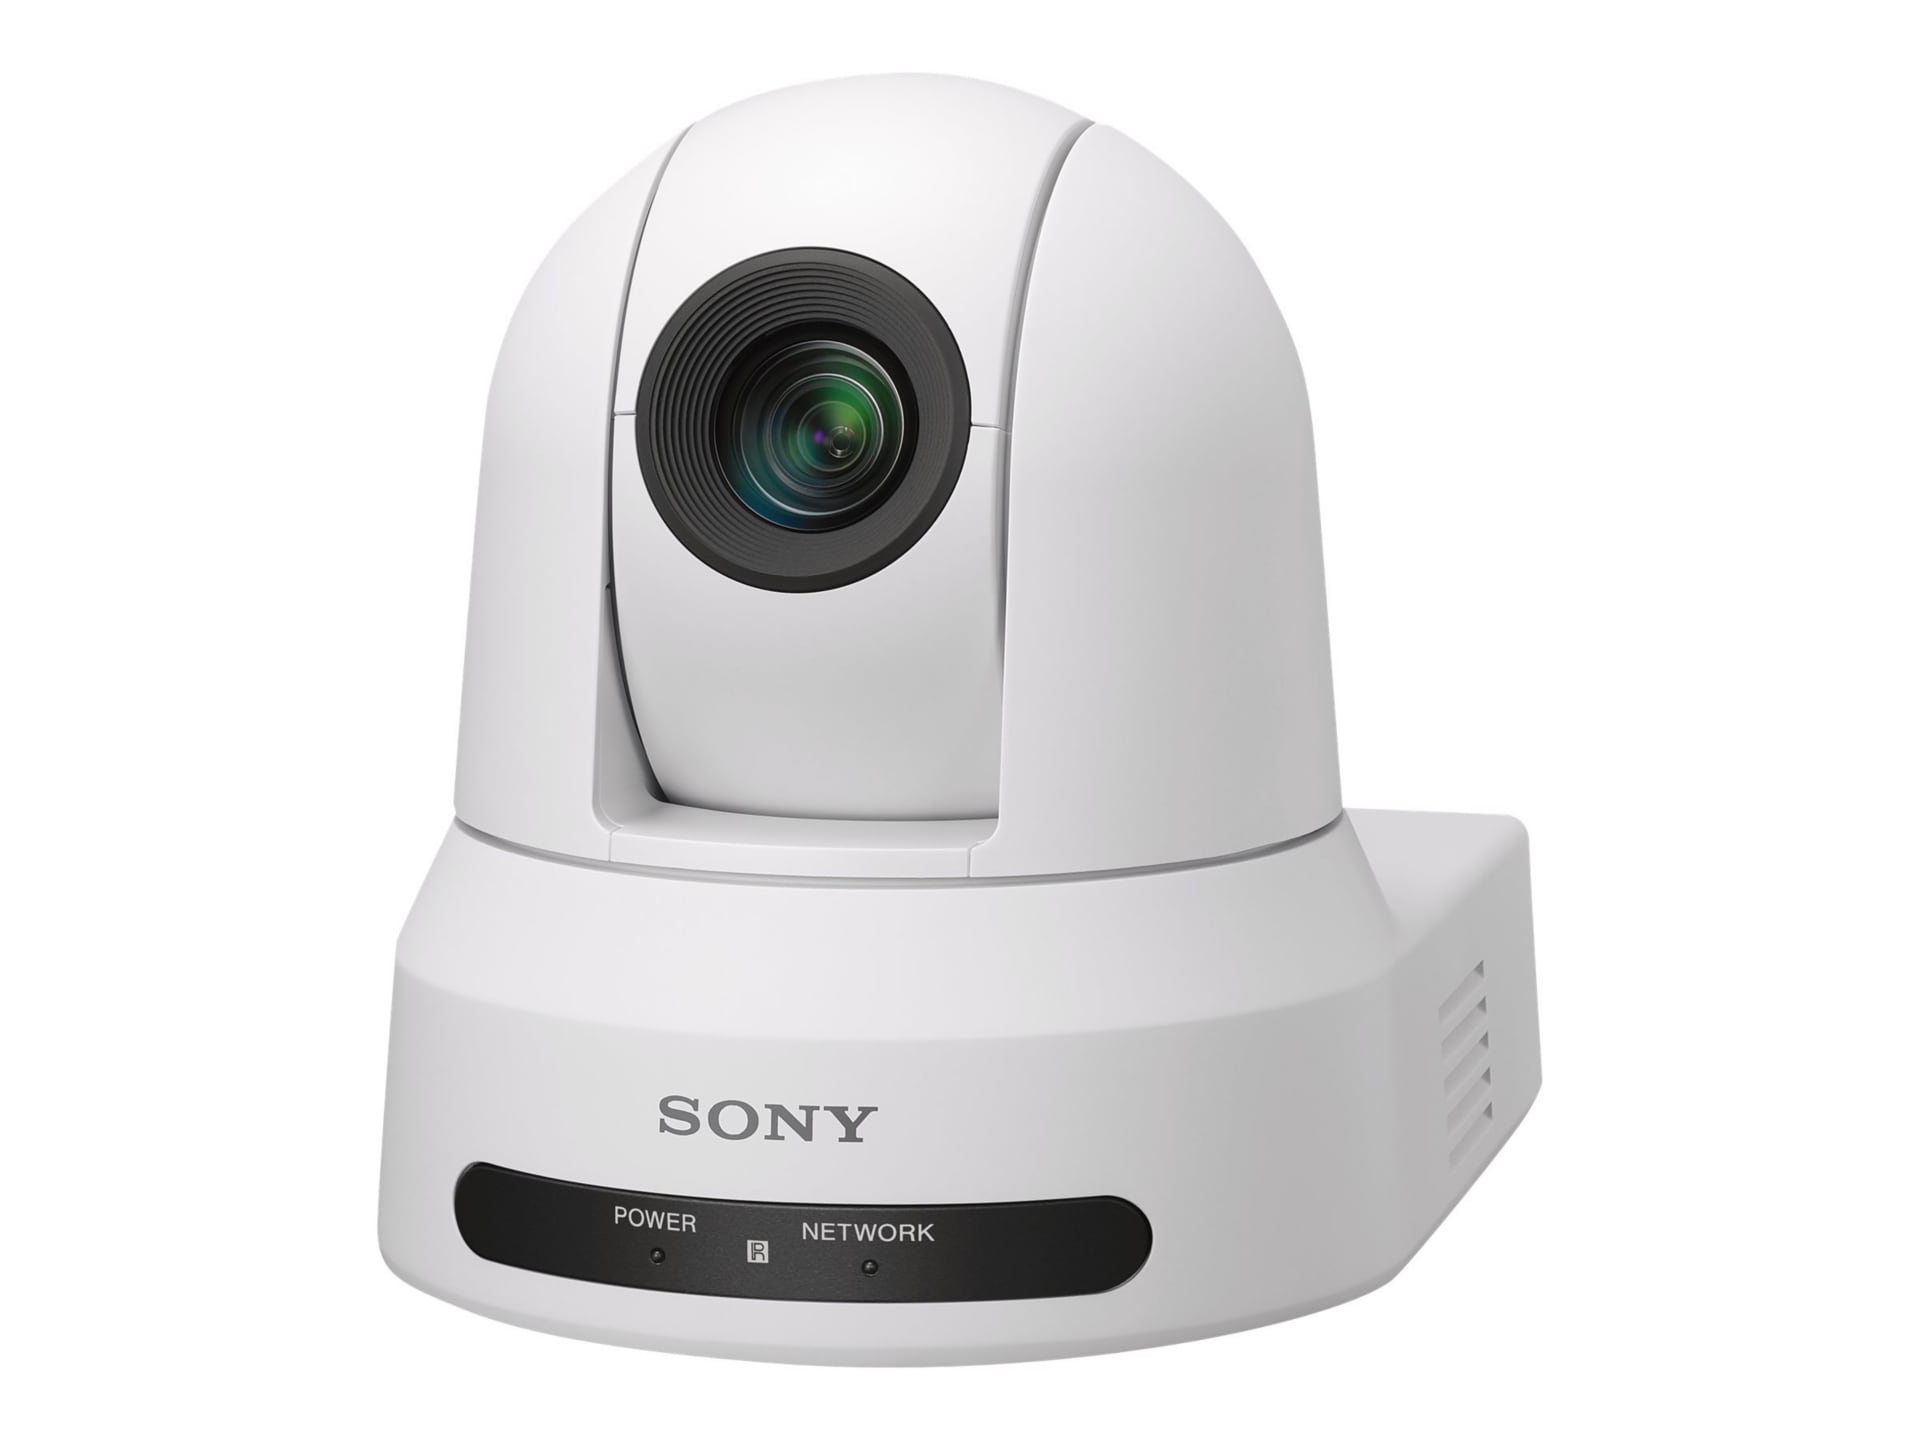 Sony SRG-X400 - conference camera - turret - with NDI|HX license